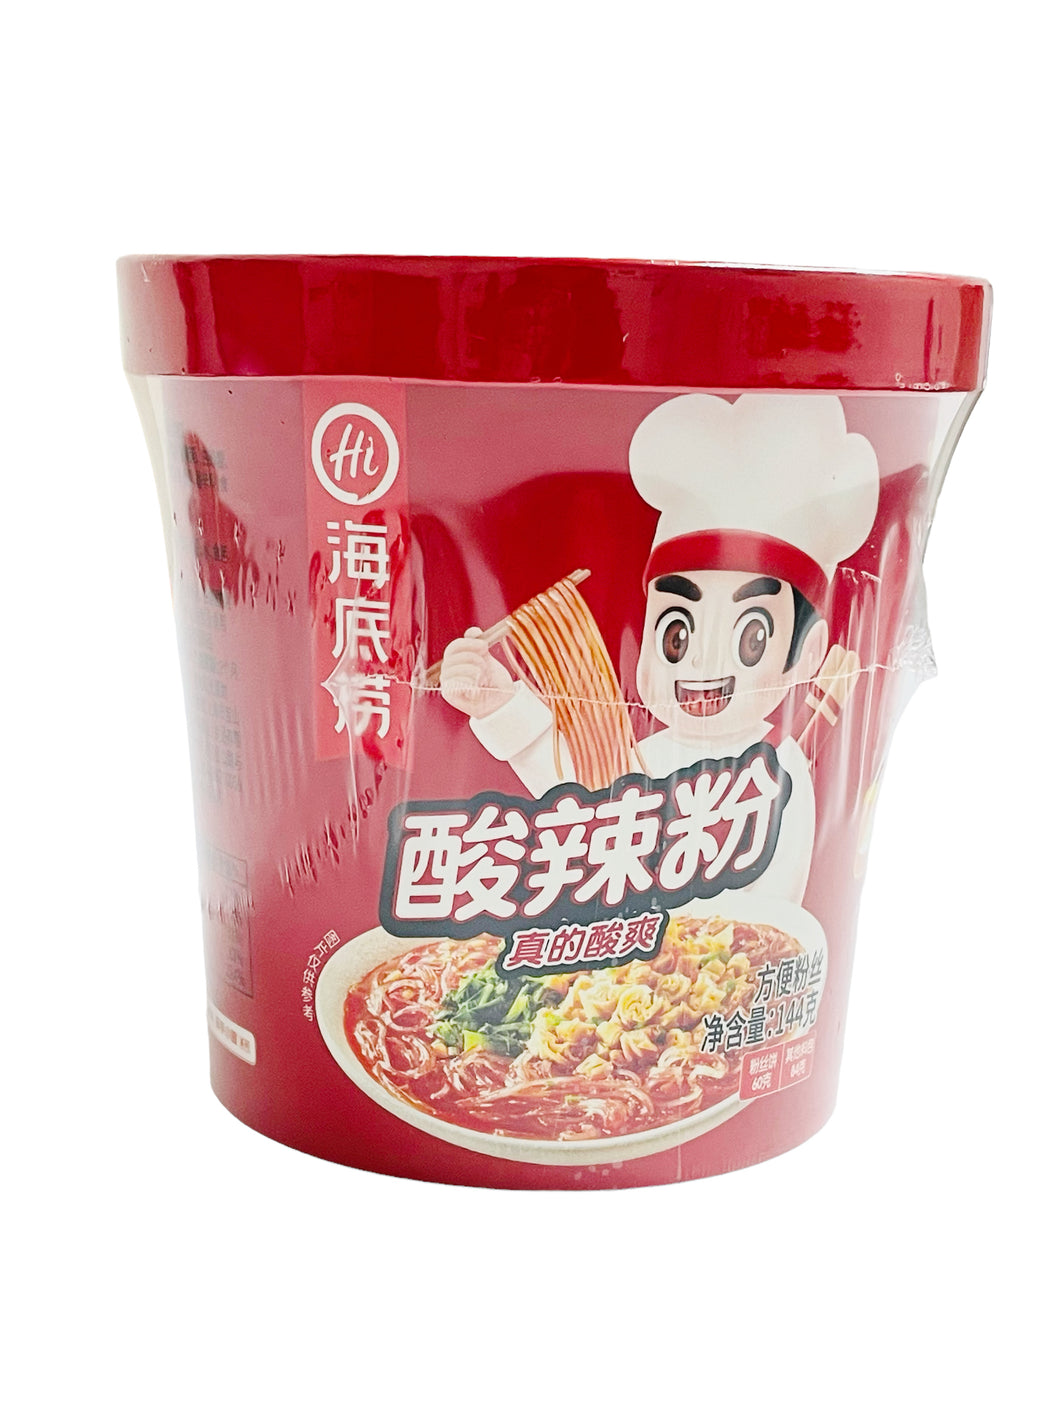 Hi Hot and Sour Rice Noodles 136g 海底捞酸辣粉